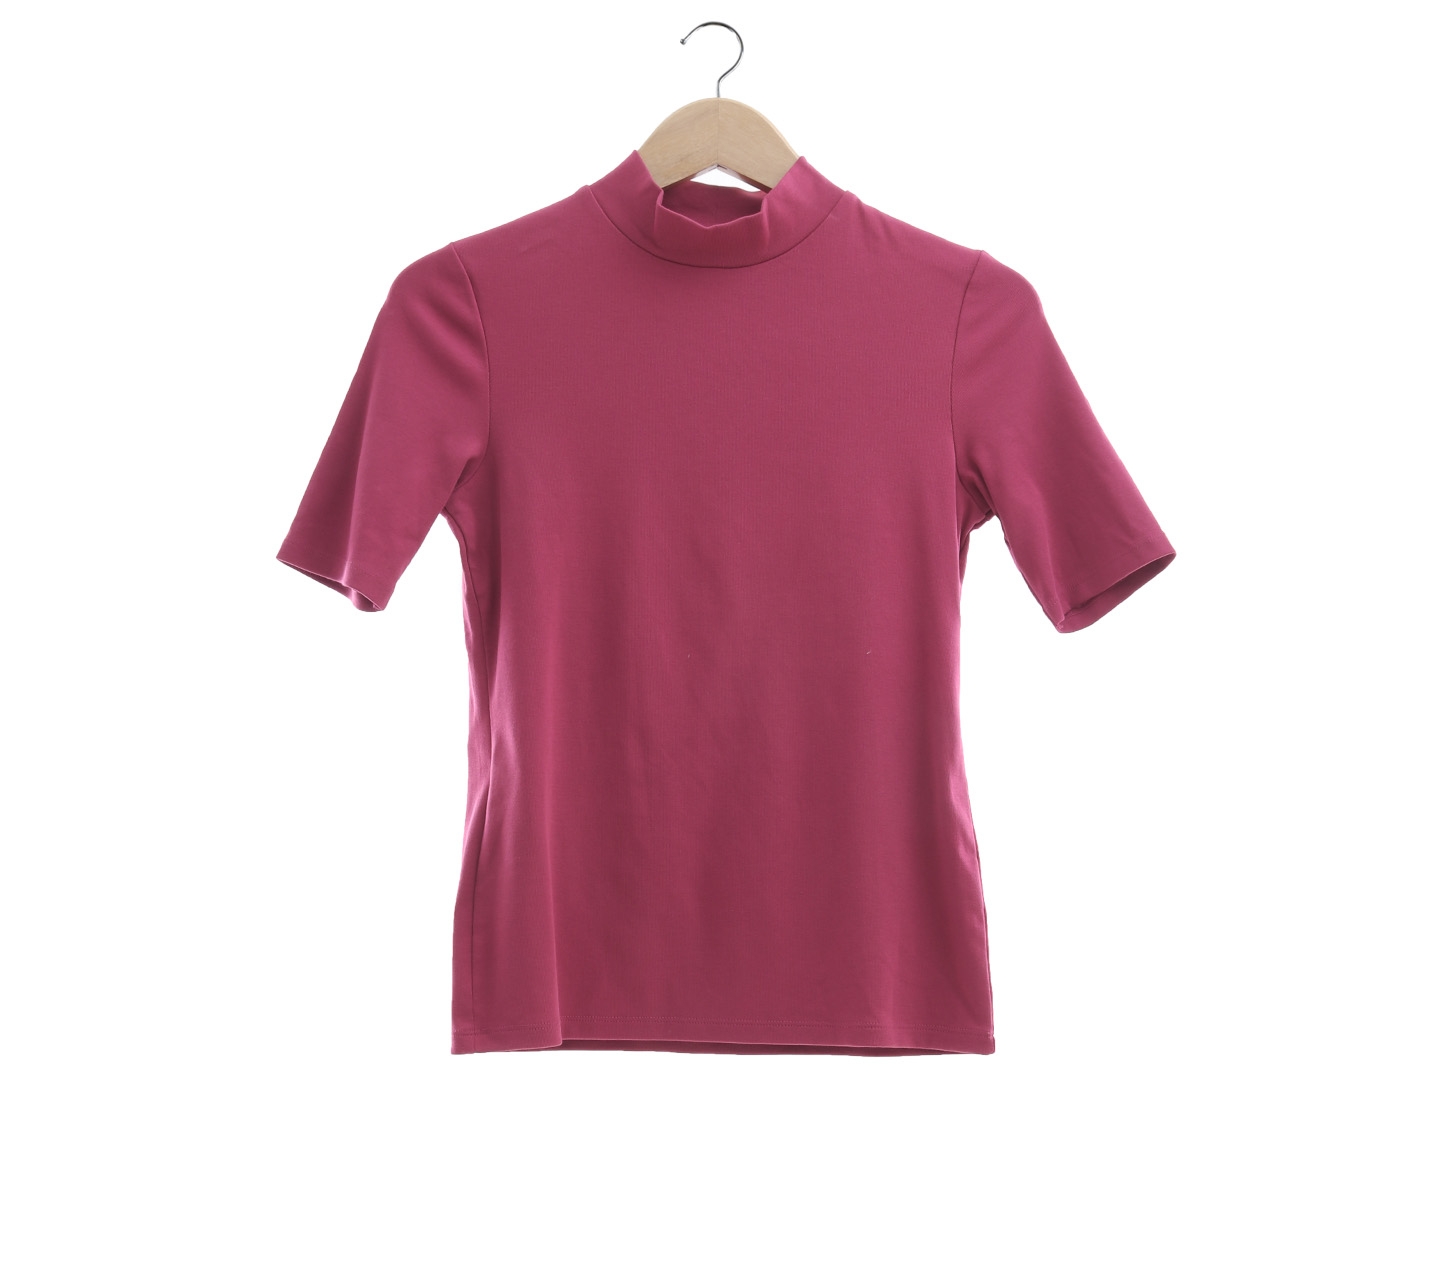 Uniqlo Purple T-Shirt